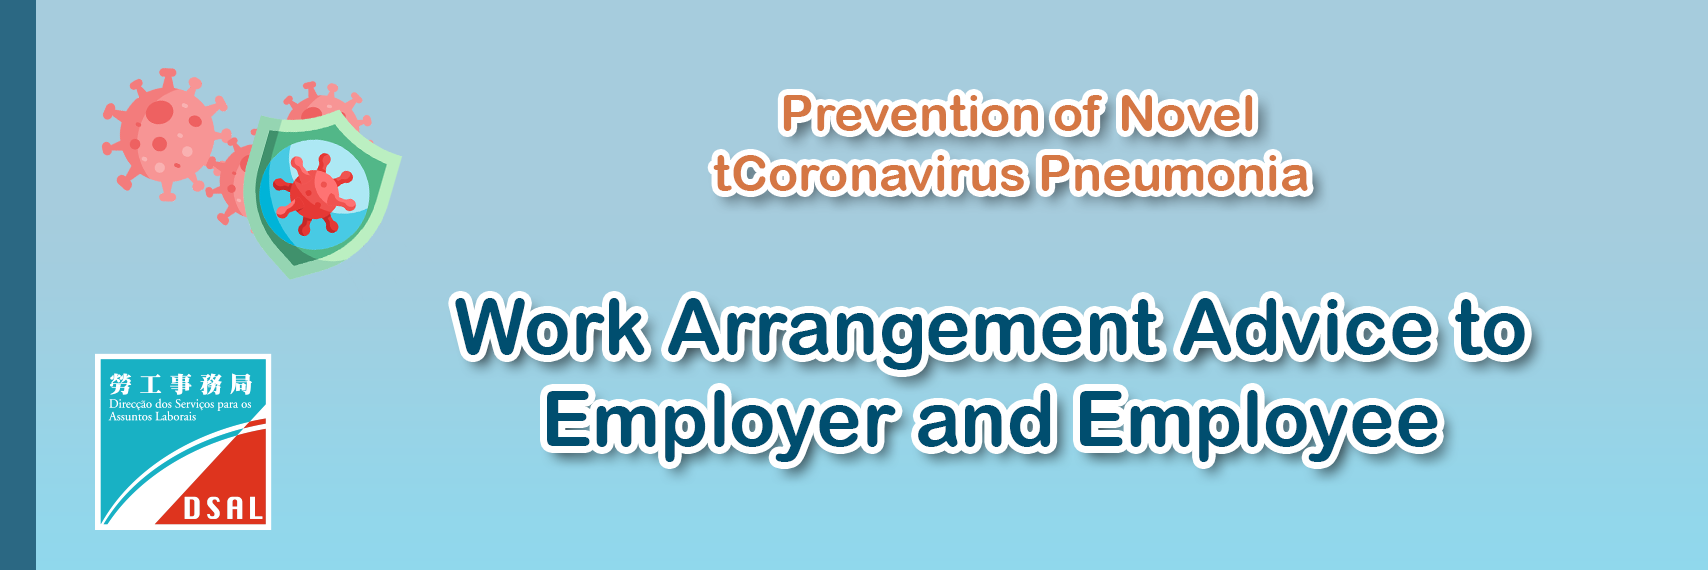 Prevention of Novel Coronavirus Pneumonia – Work Arrangement Advice to Employer and Employee